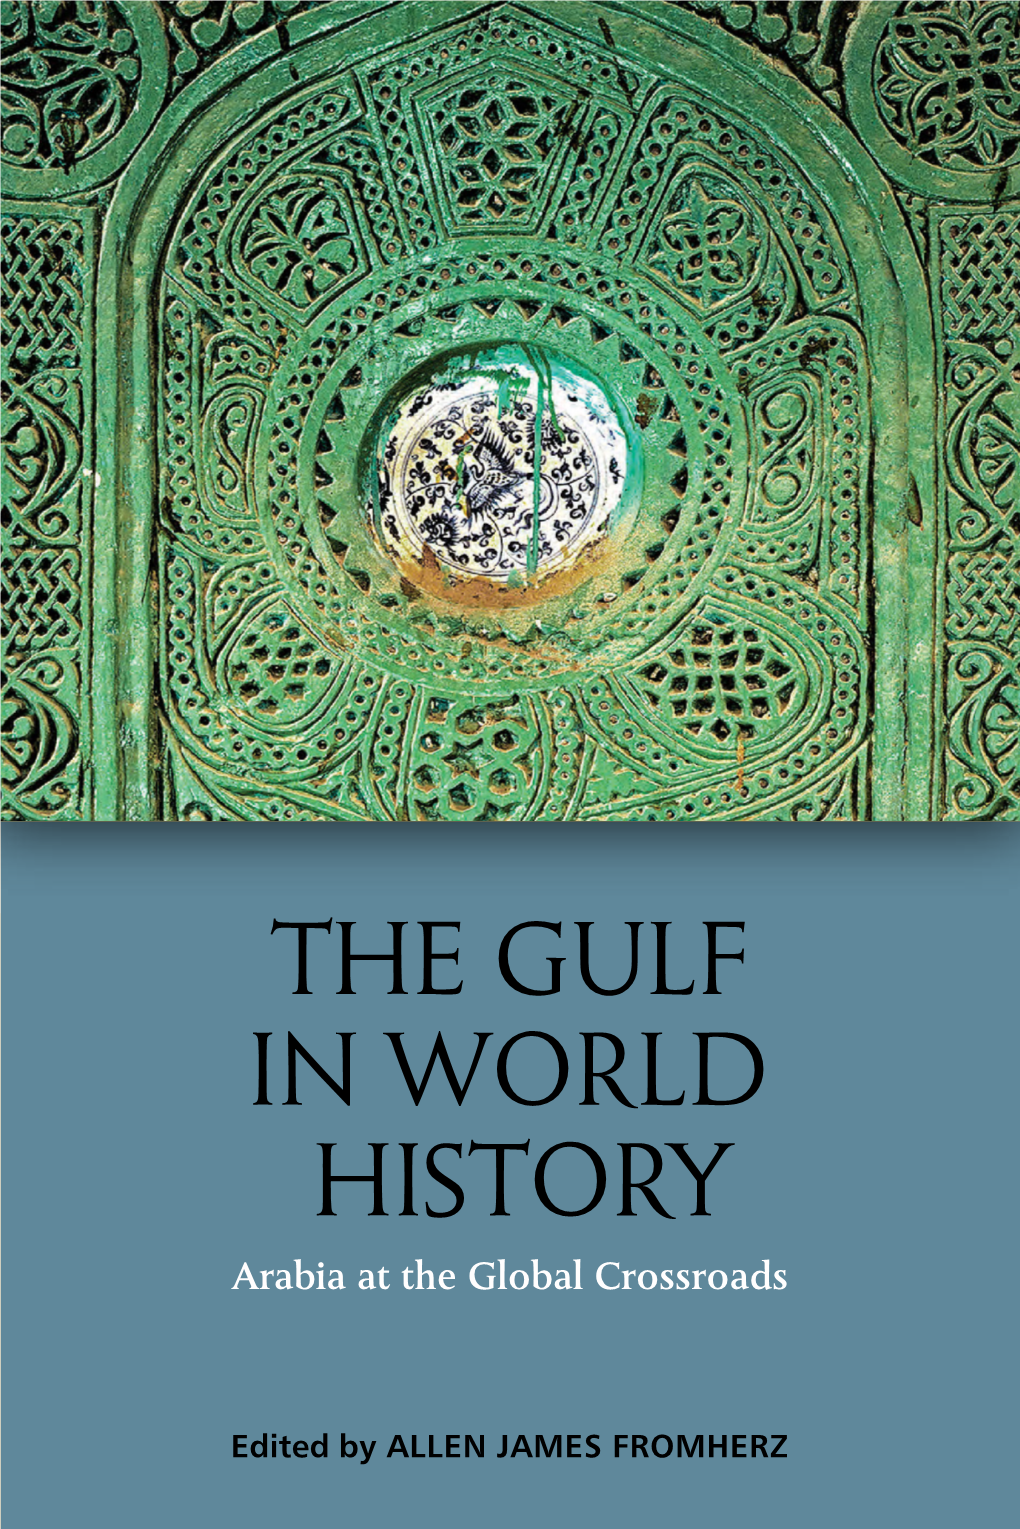 THE GULF in WORLD HISTORY Arabia at the Global Crossroads